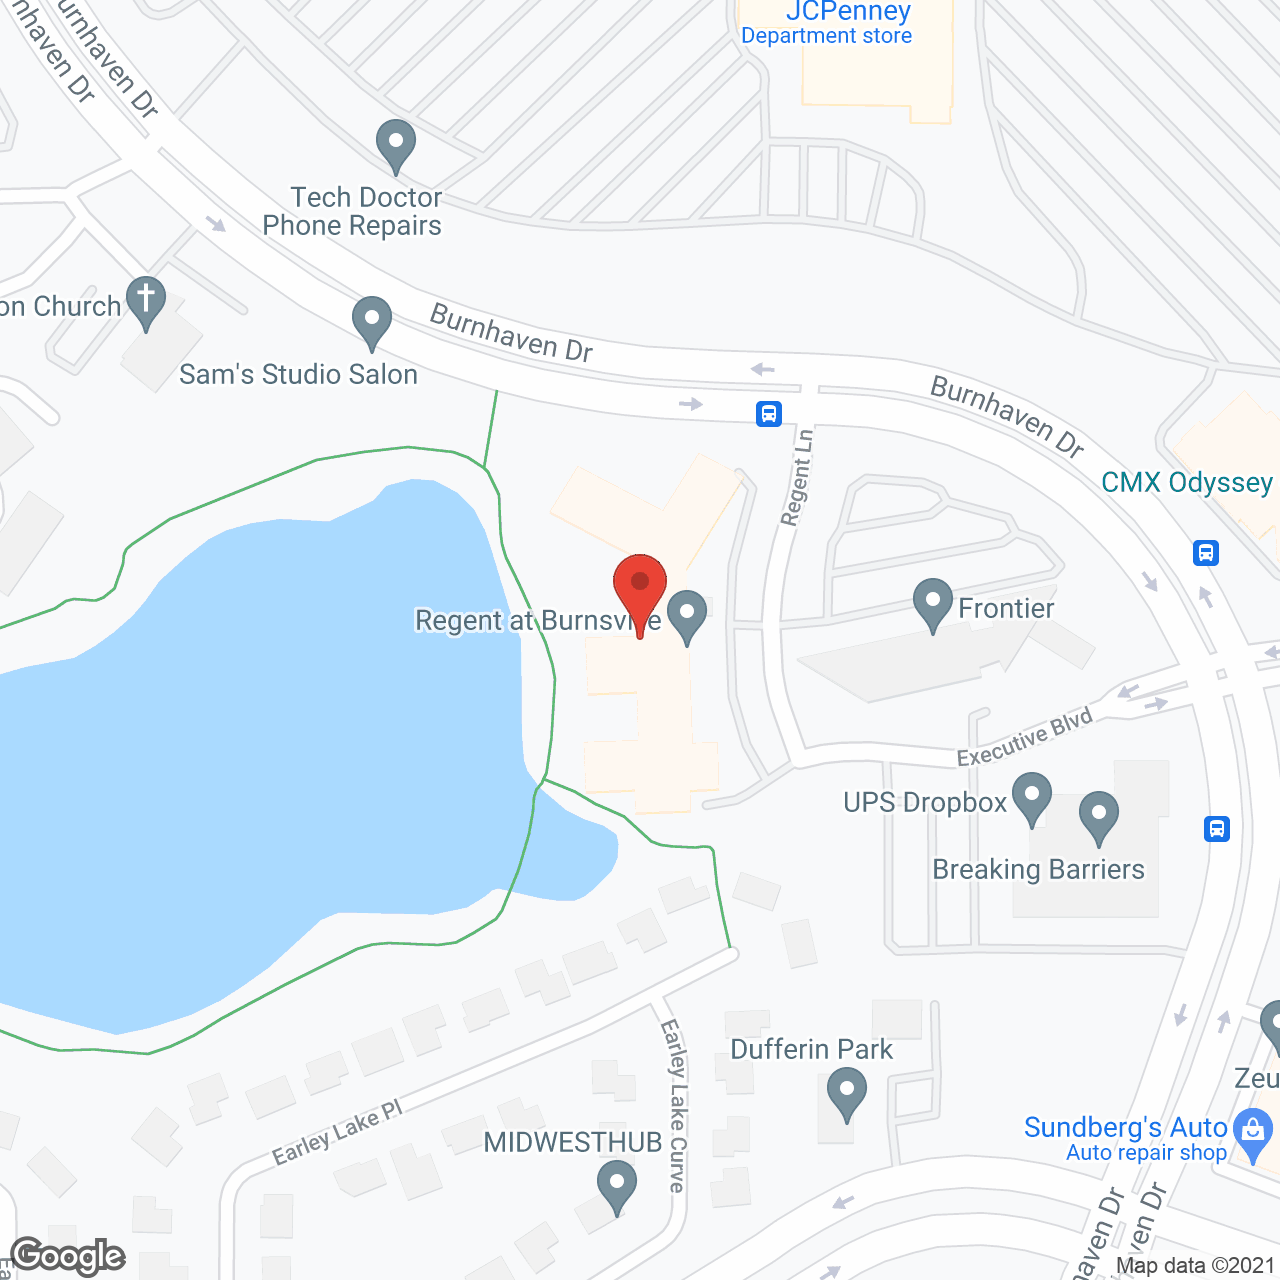 Regent at Burnsville in google map